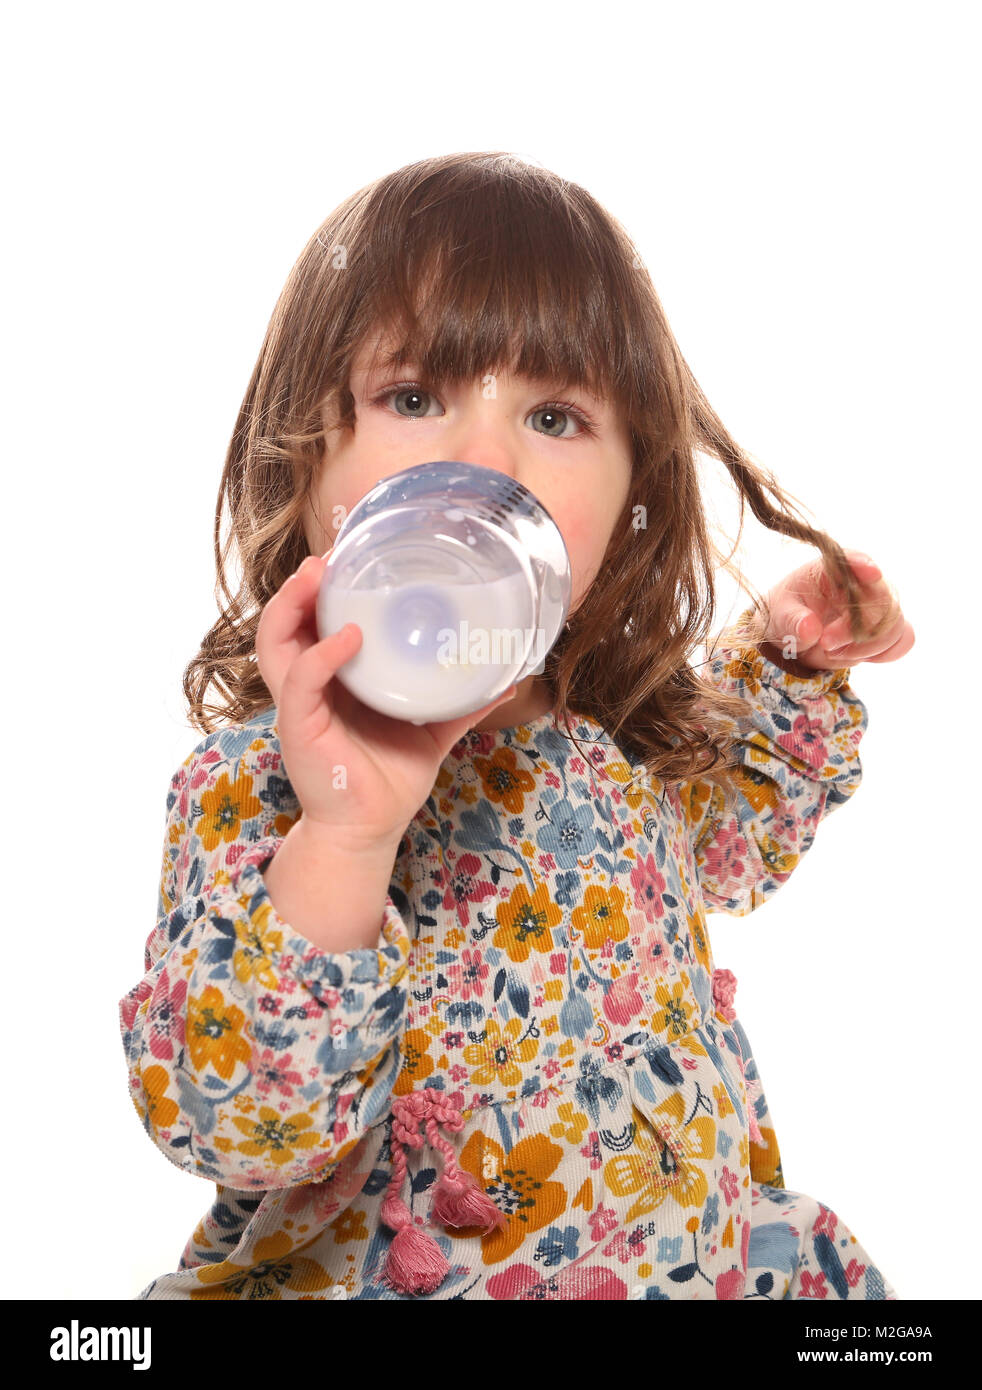 toddler girl drinking milk from a bottle Stock Photo